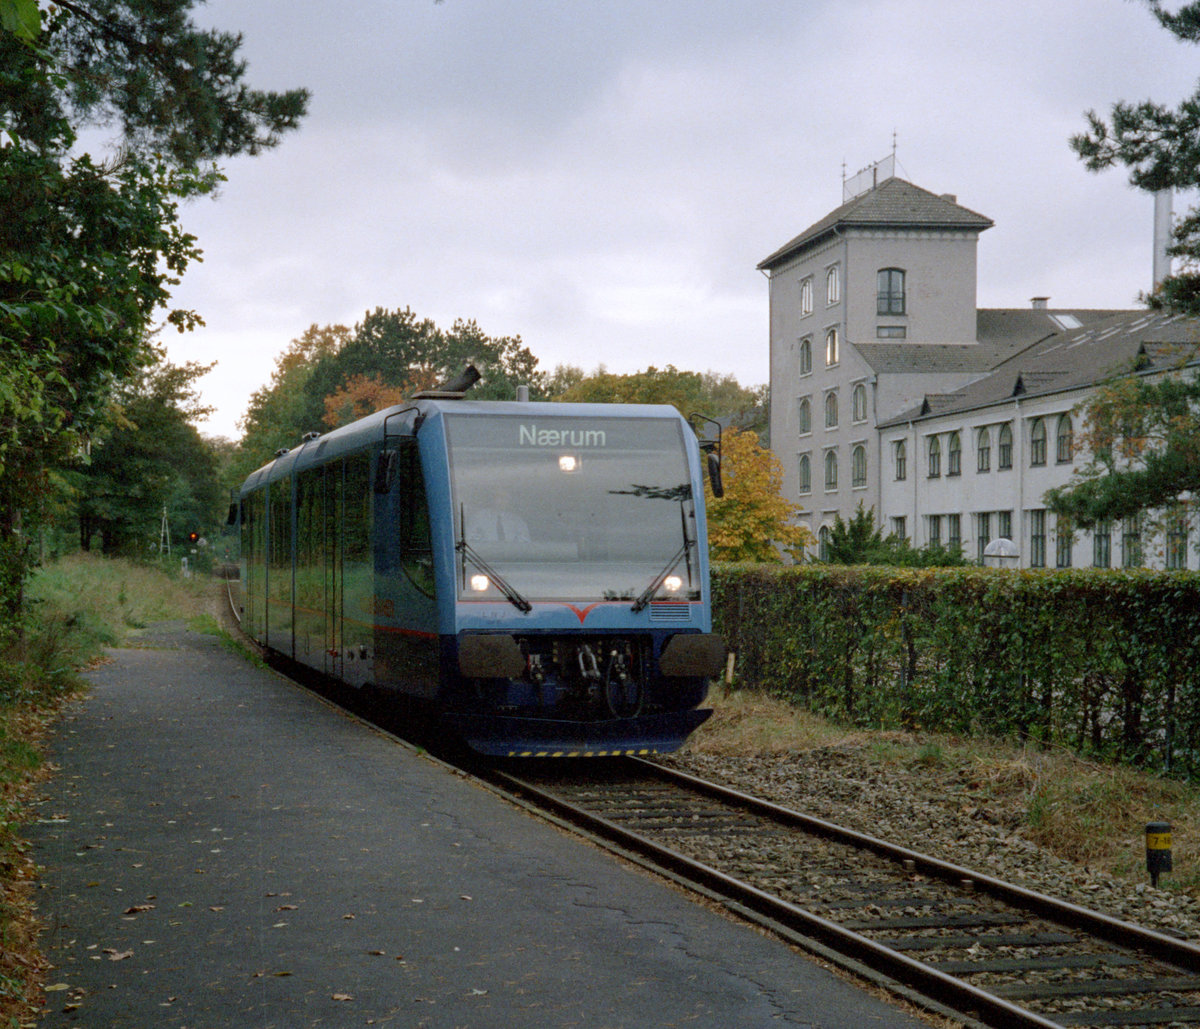 Lyngby-Nærum-Jernbane (LNJ, Nærumbanen) RegioSprinter am Haltepunkt Ravnholm. Datum: 17. Oktober 2000. - Scan eines Farbnegativs. Film: AGFA HDC 200-plus. Kamera: Minolta XG-1.